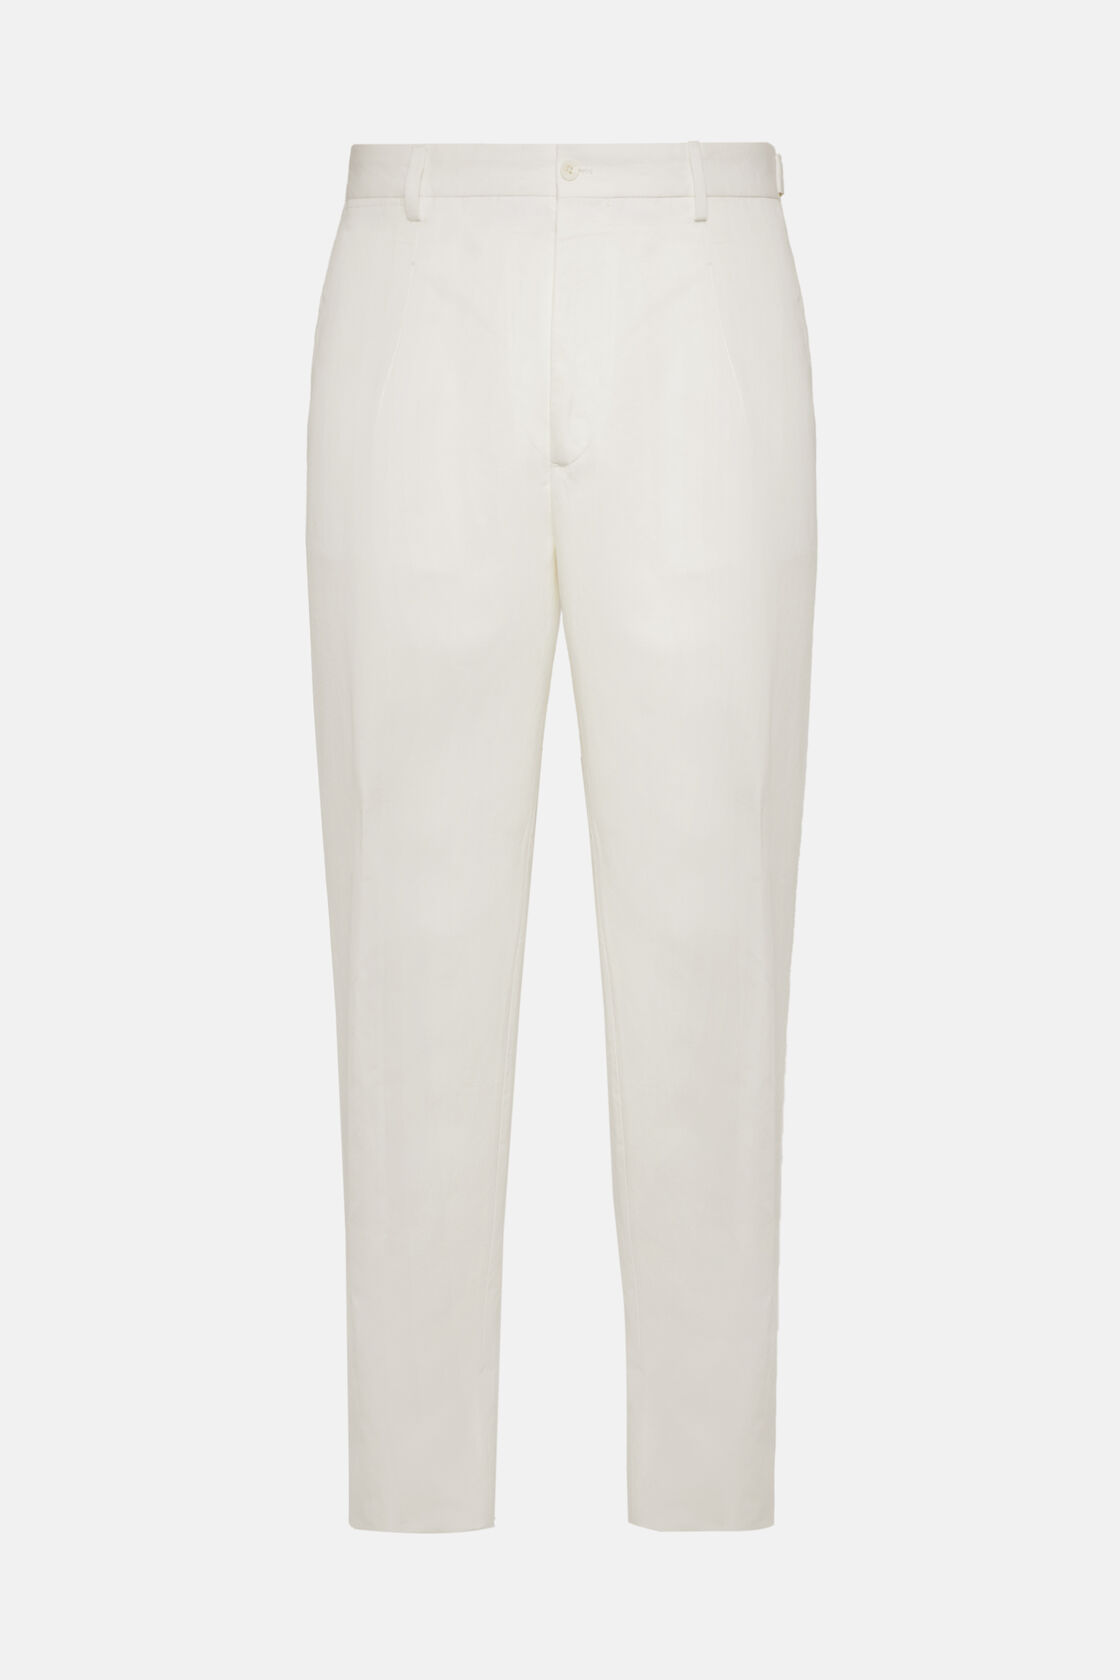 Pantaloni In Cotone Lino, Bianco, hi-res